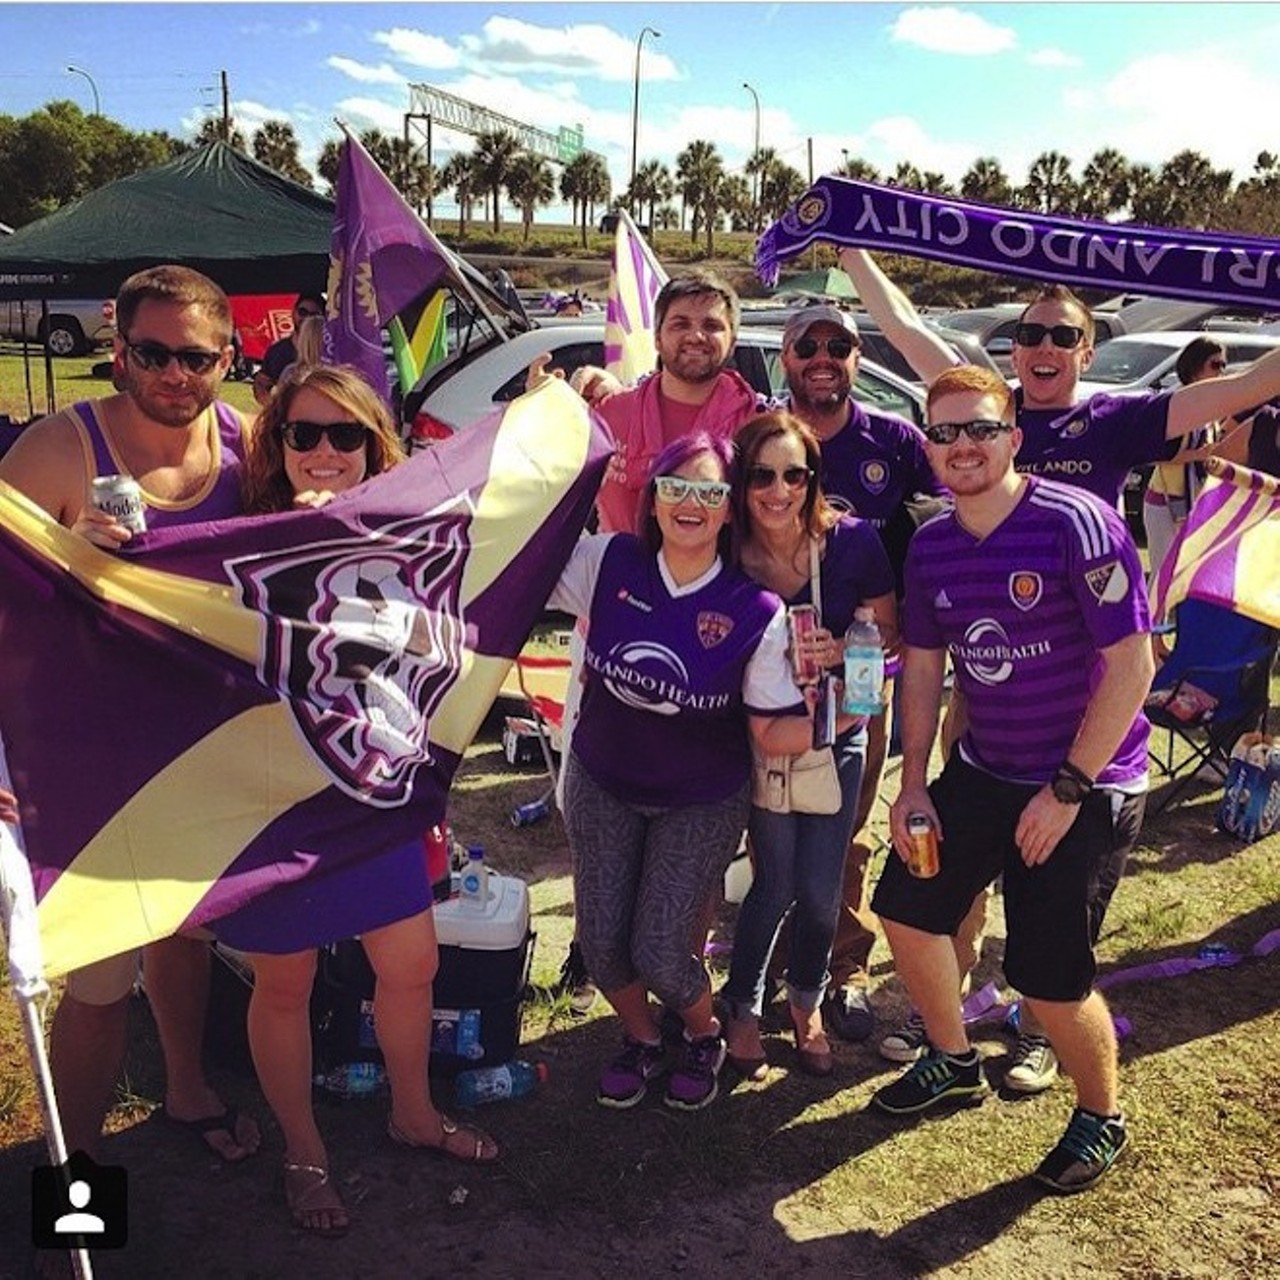 Orlando City Soccer via juliahulia on Instagram